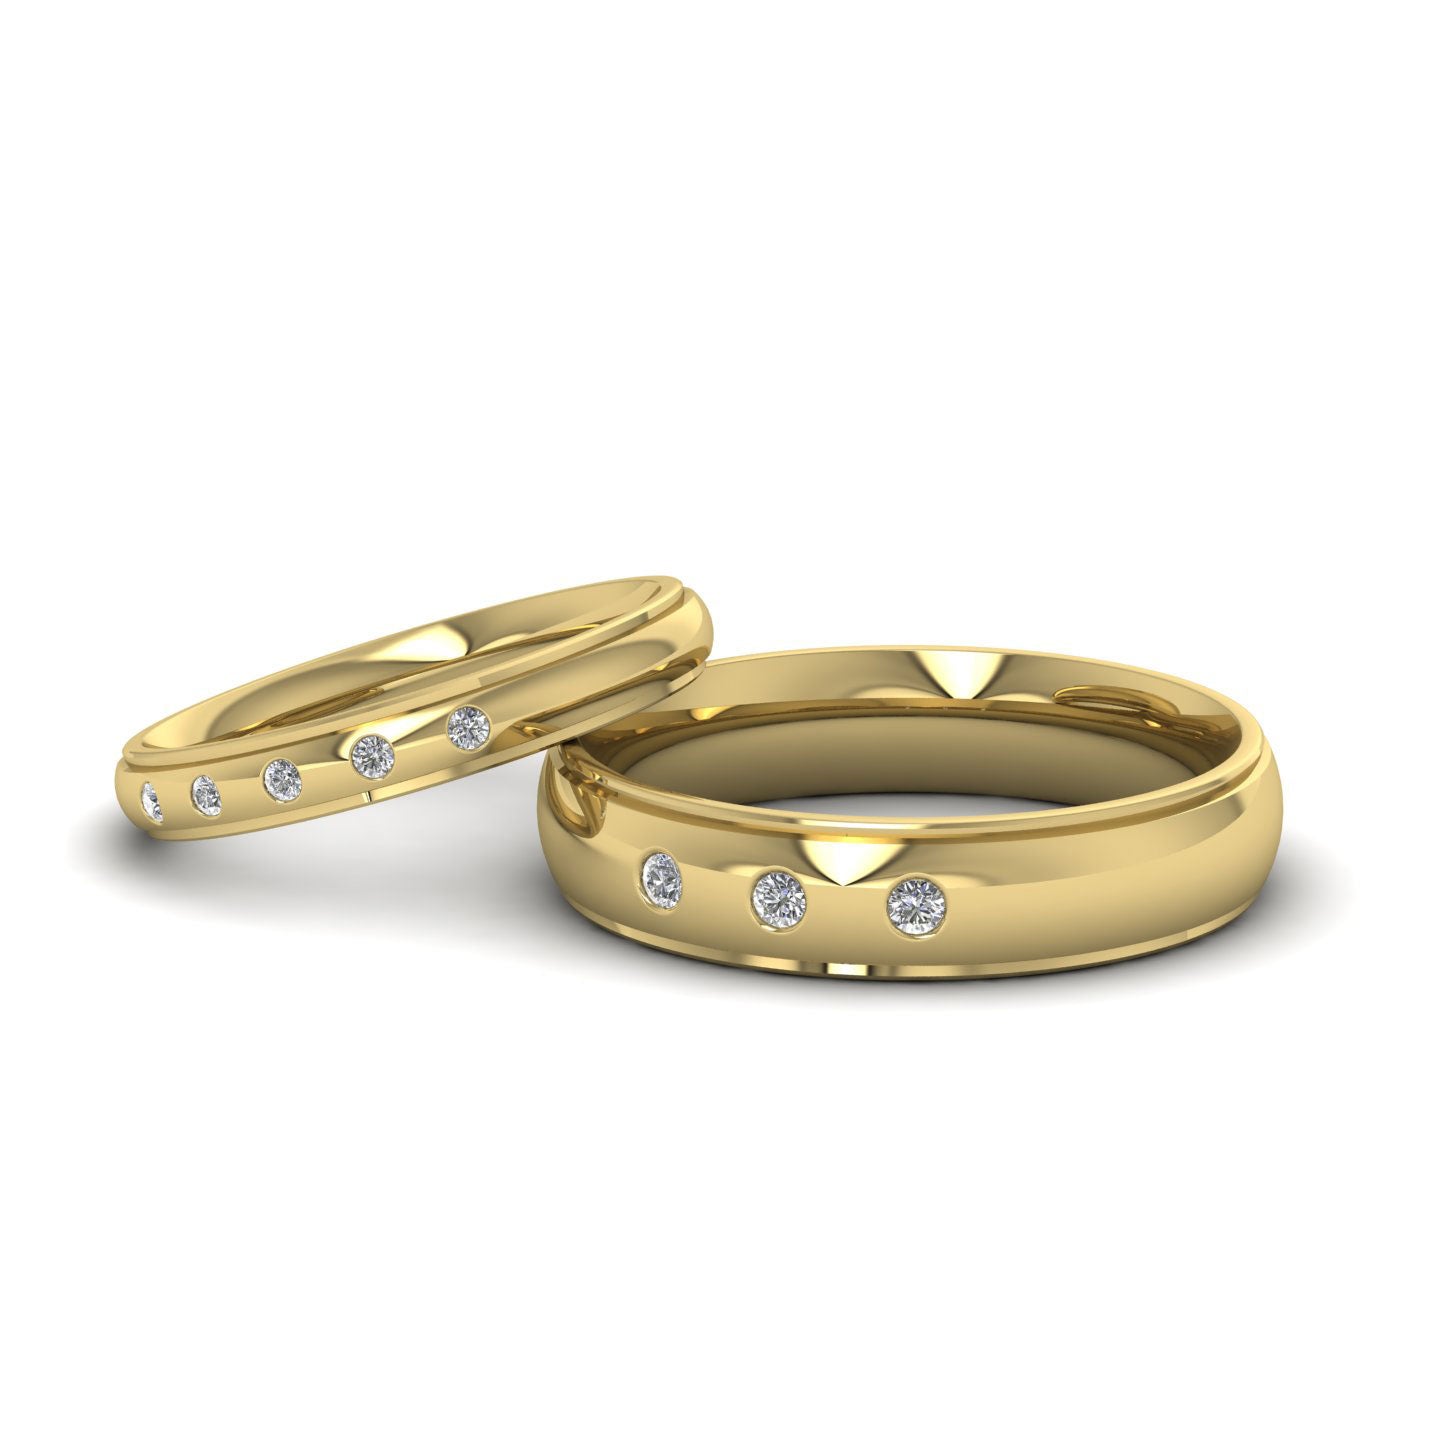 Line Pattern And Three Diamond Set 14ct Yellow Gold 5mm Wedding Ring